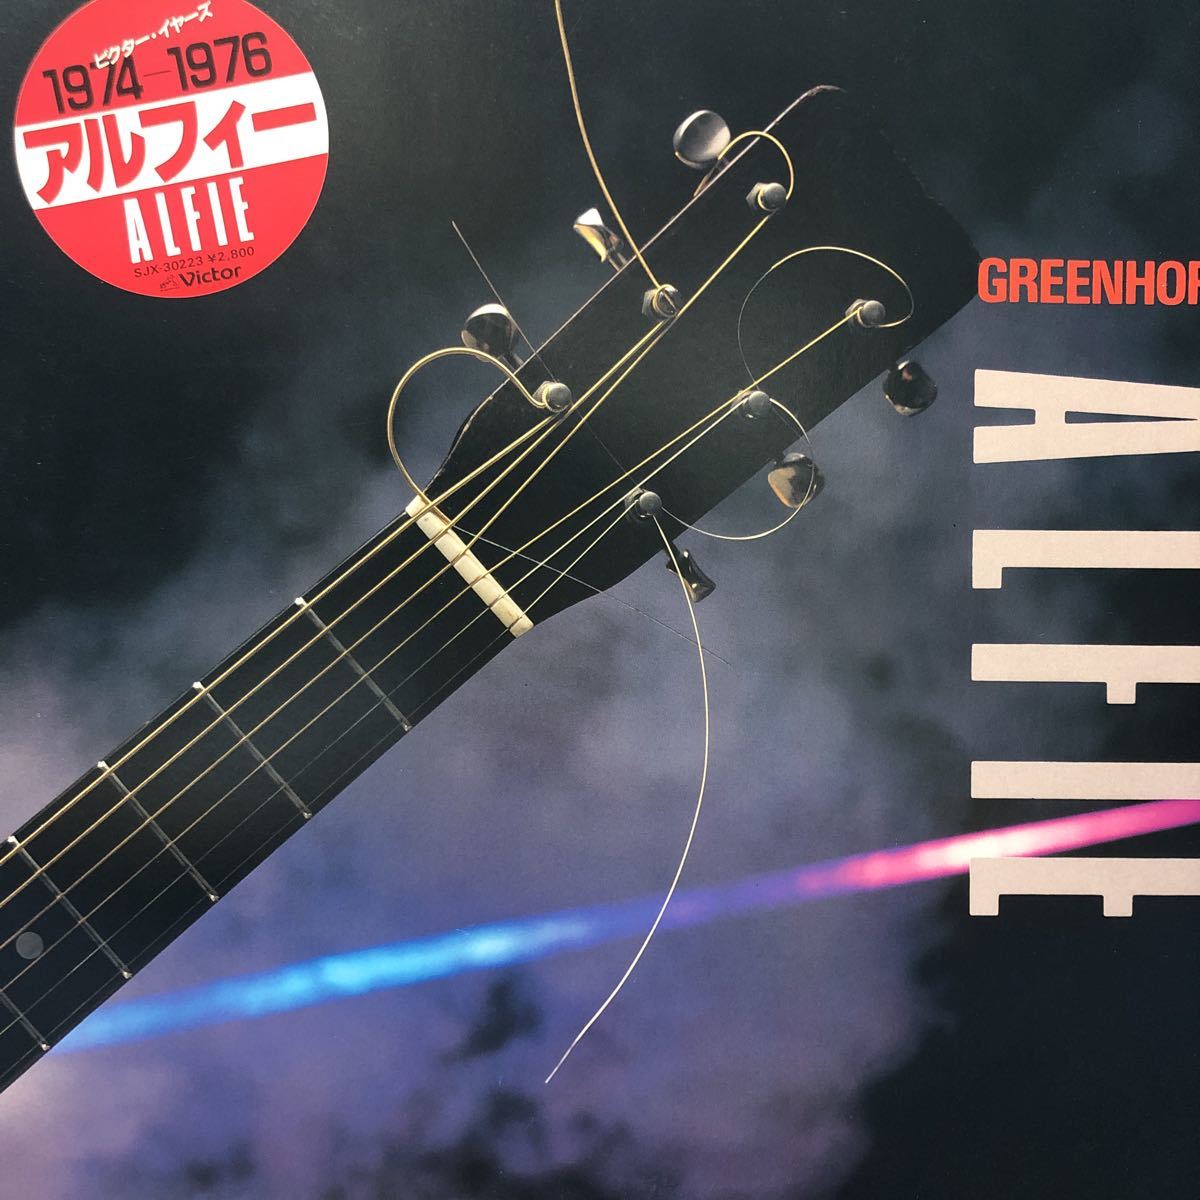 U LP ALFEE GREENHORN 1974-1976 アルフィー レコード 5点以上落札で送料無料_画像1